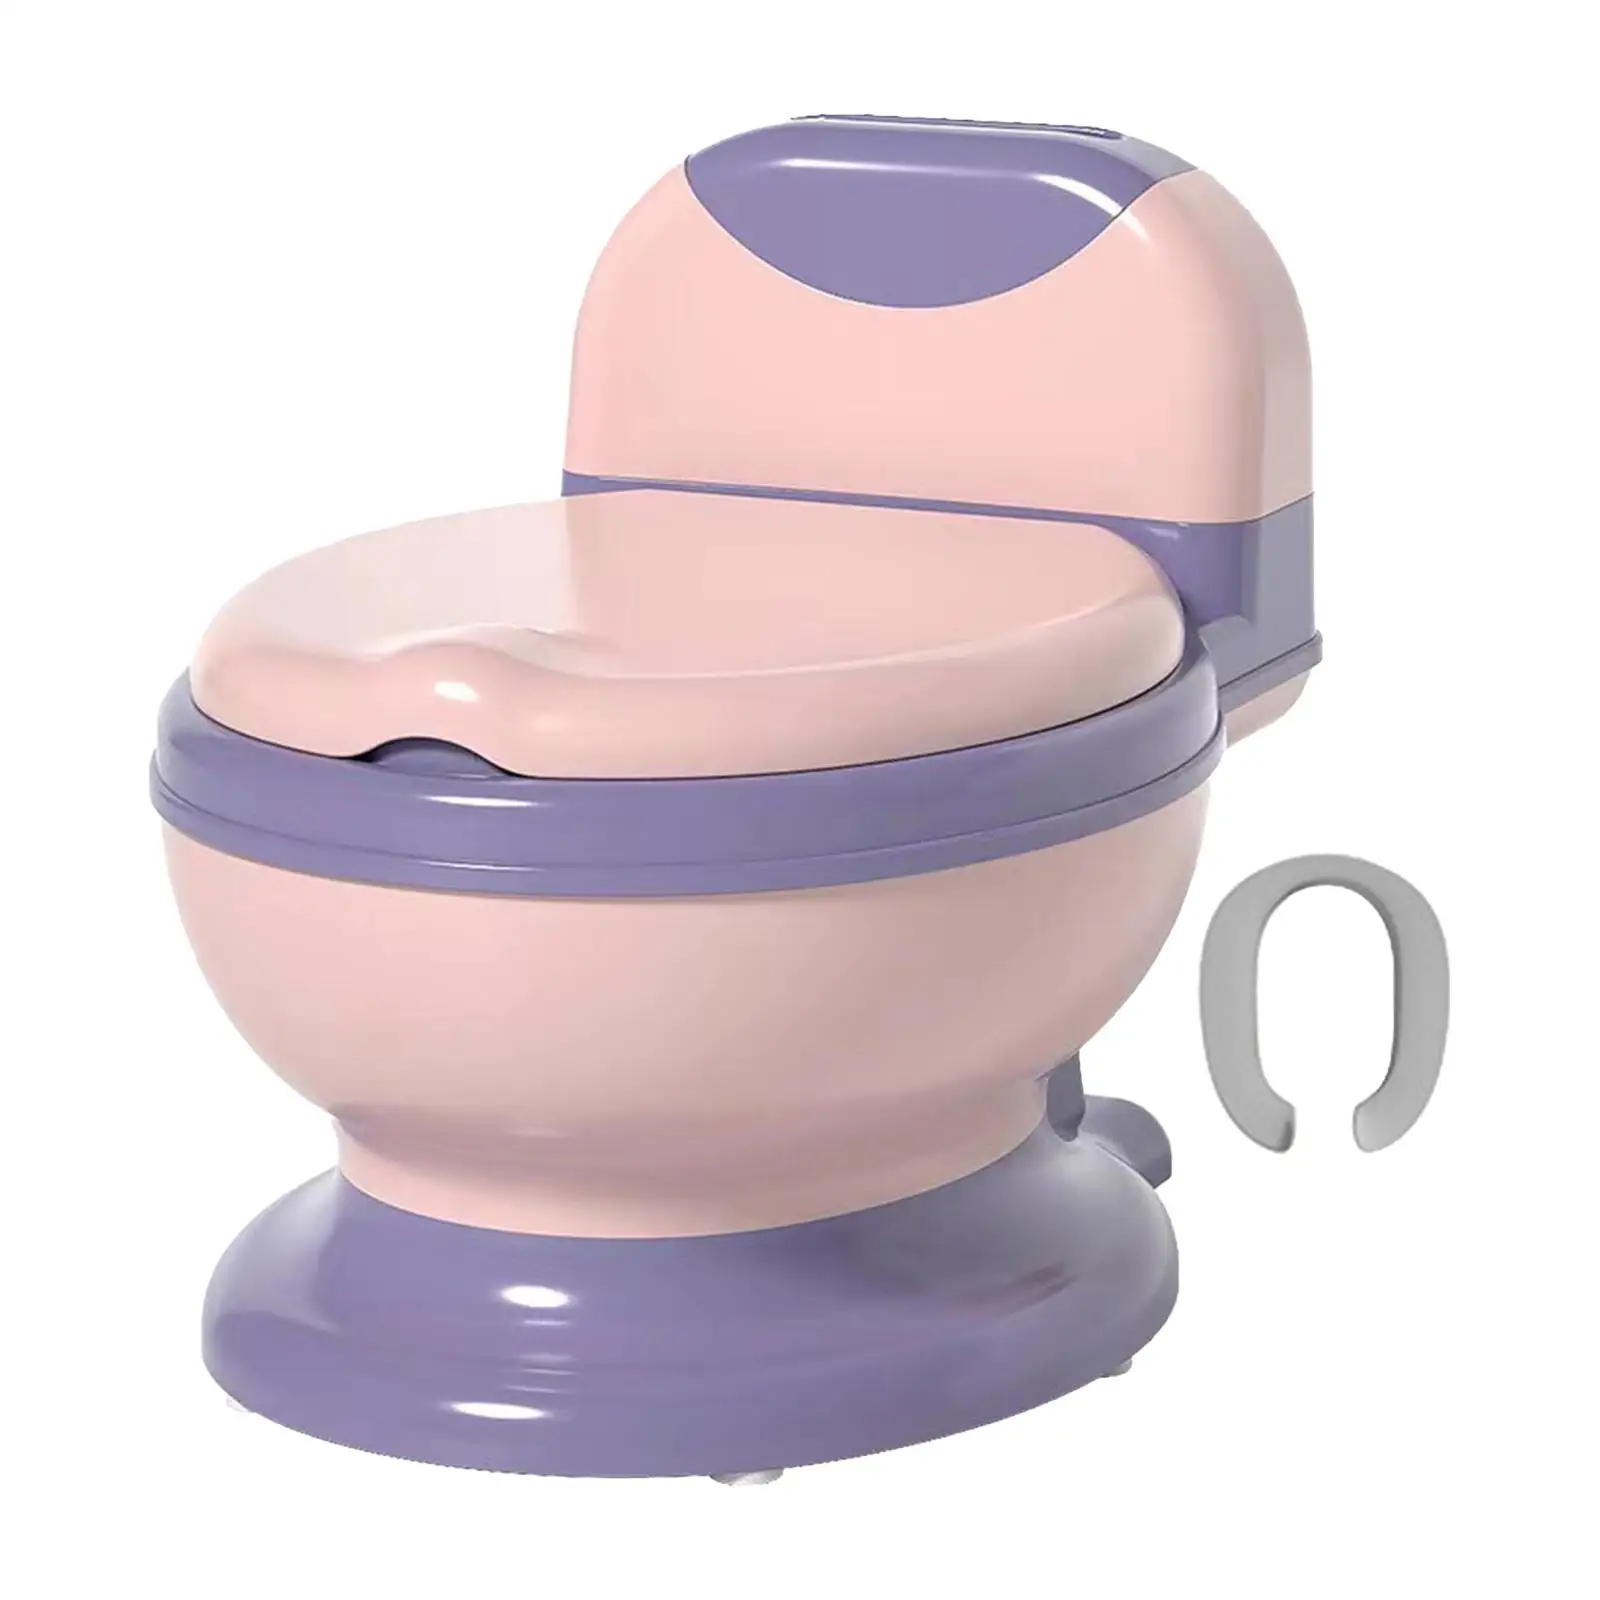 Potty Train Toilet Toilet Training Seat Potty Seat Potty Train Seat Realistic Toilet for Boys Girls Children Toddlers Baby